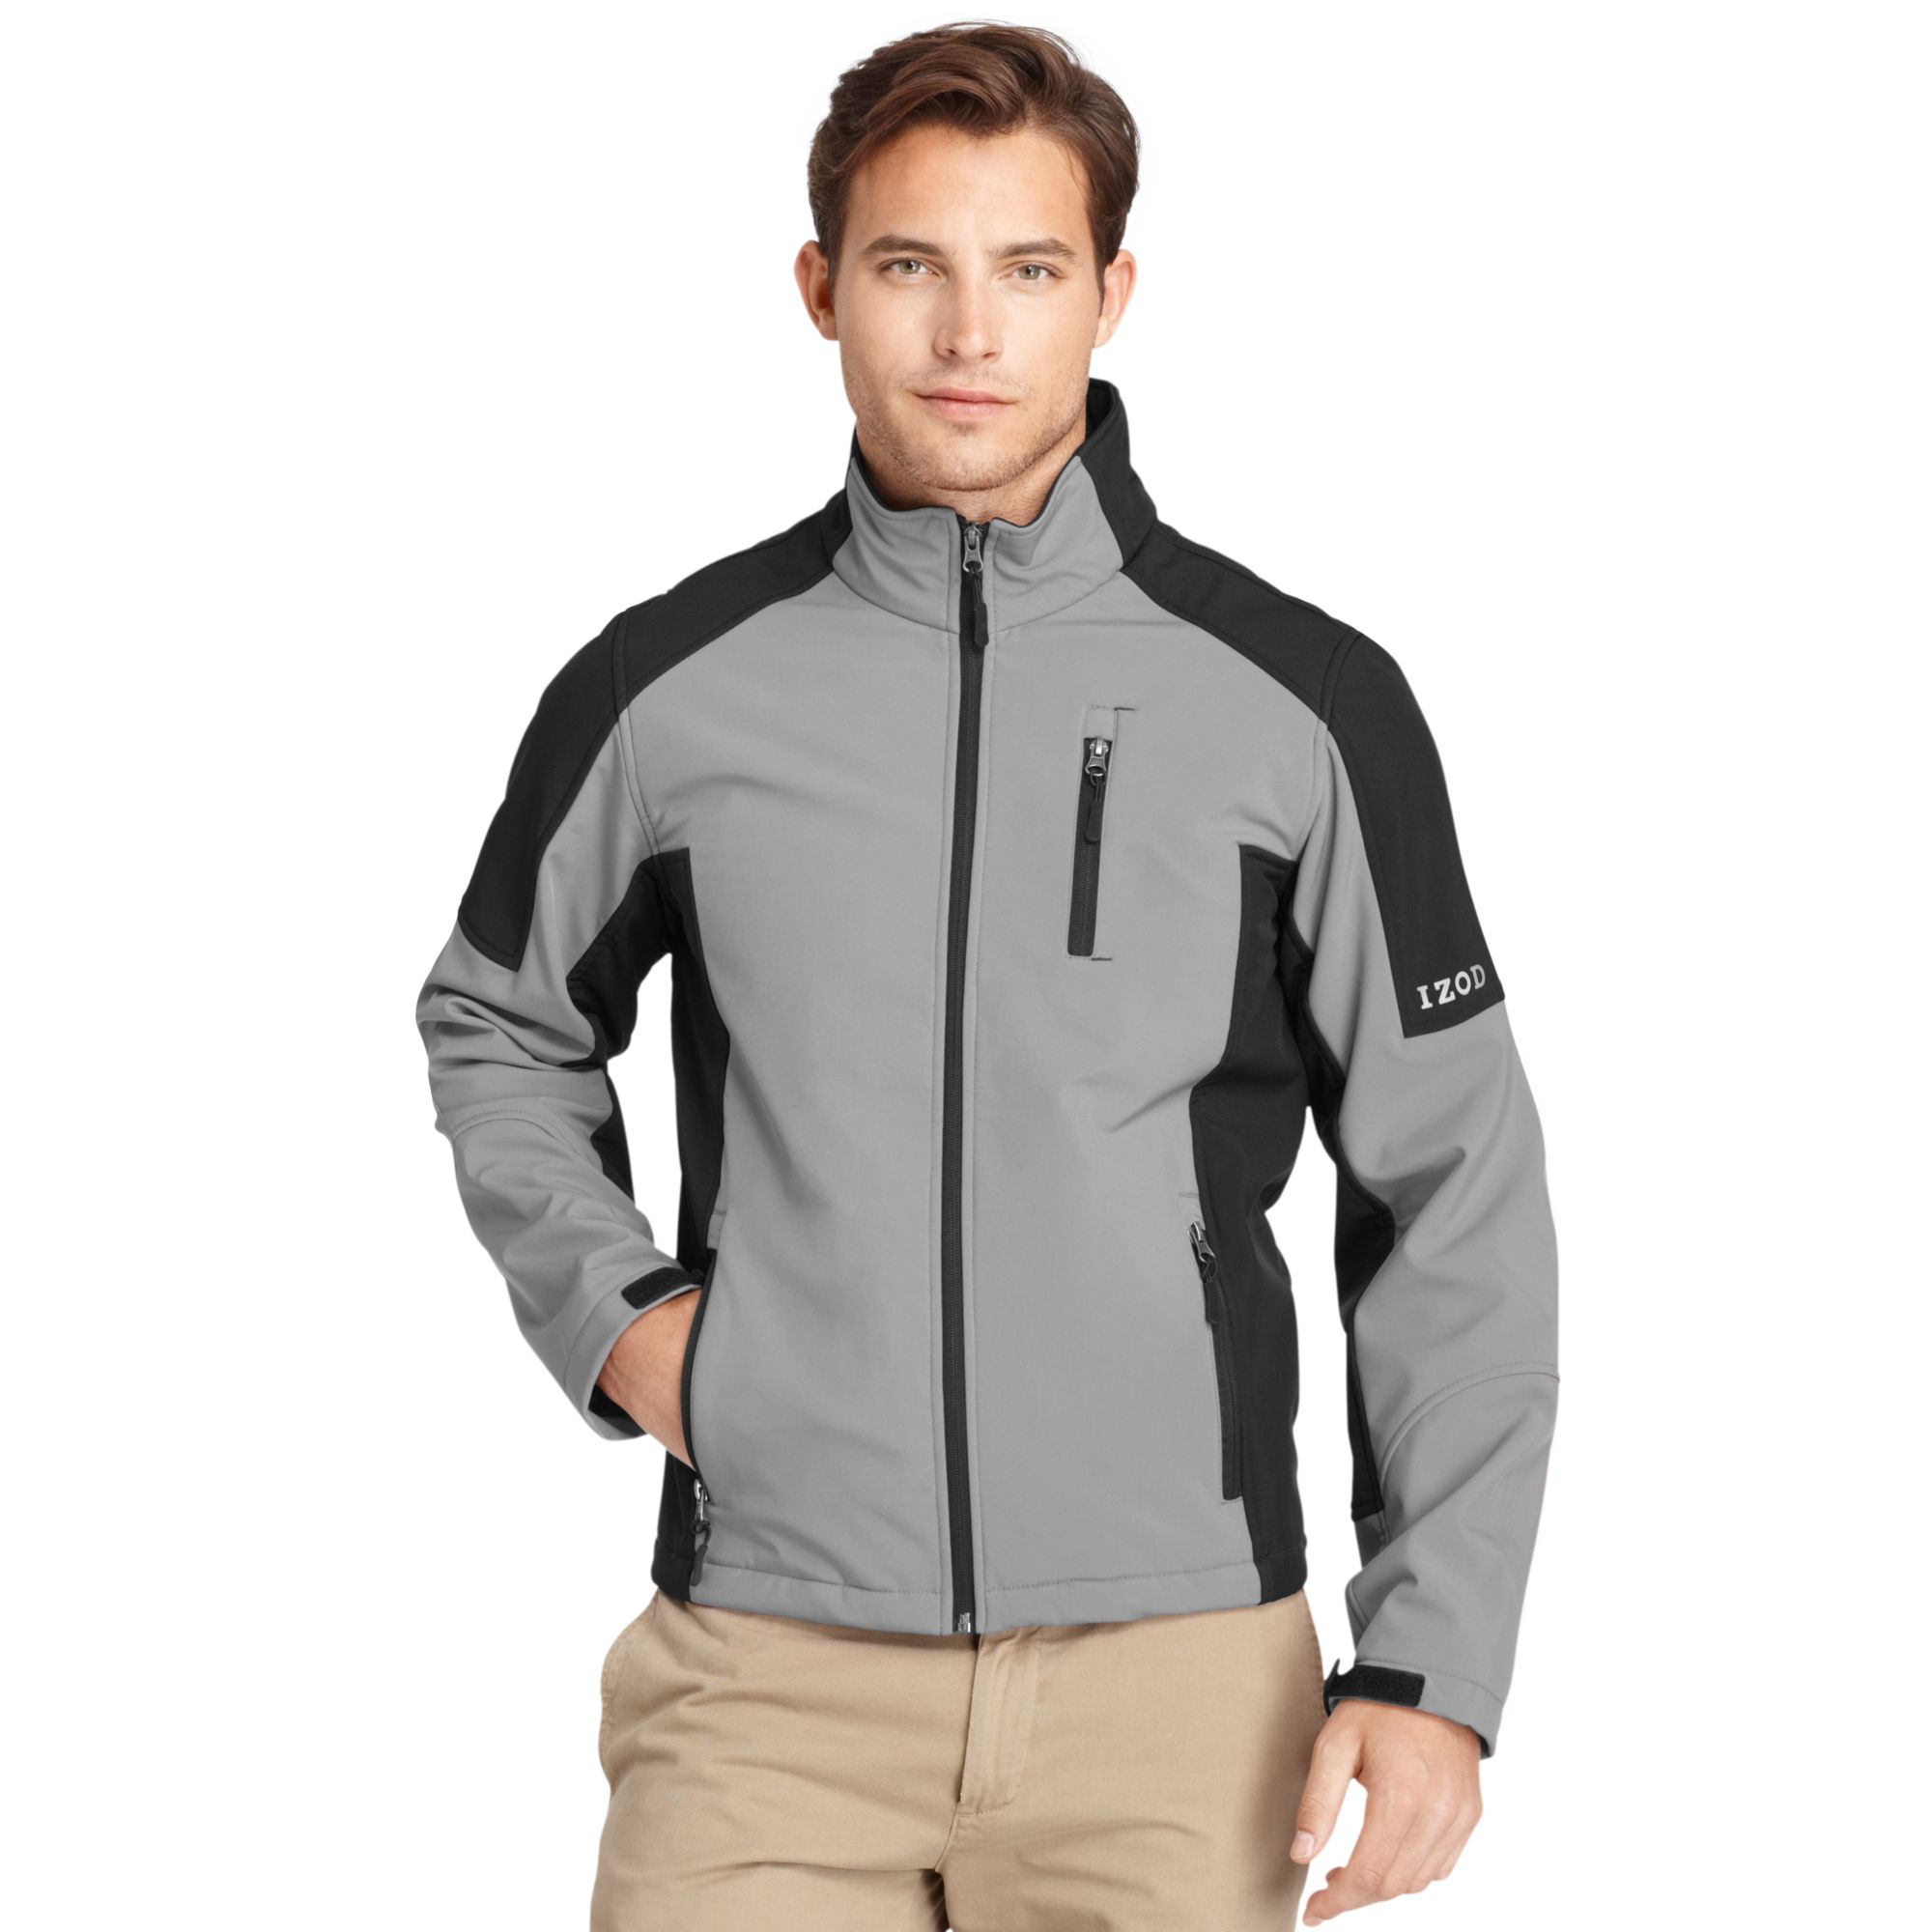 Lyst - Izod Jacket Zipfront Colorblocked Softshell Jacket in Gray for Men